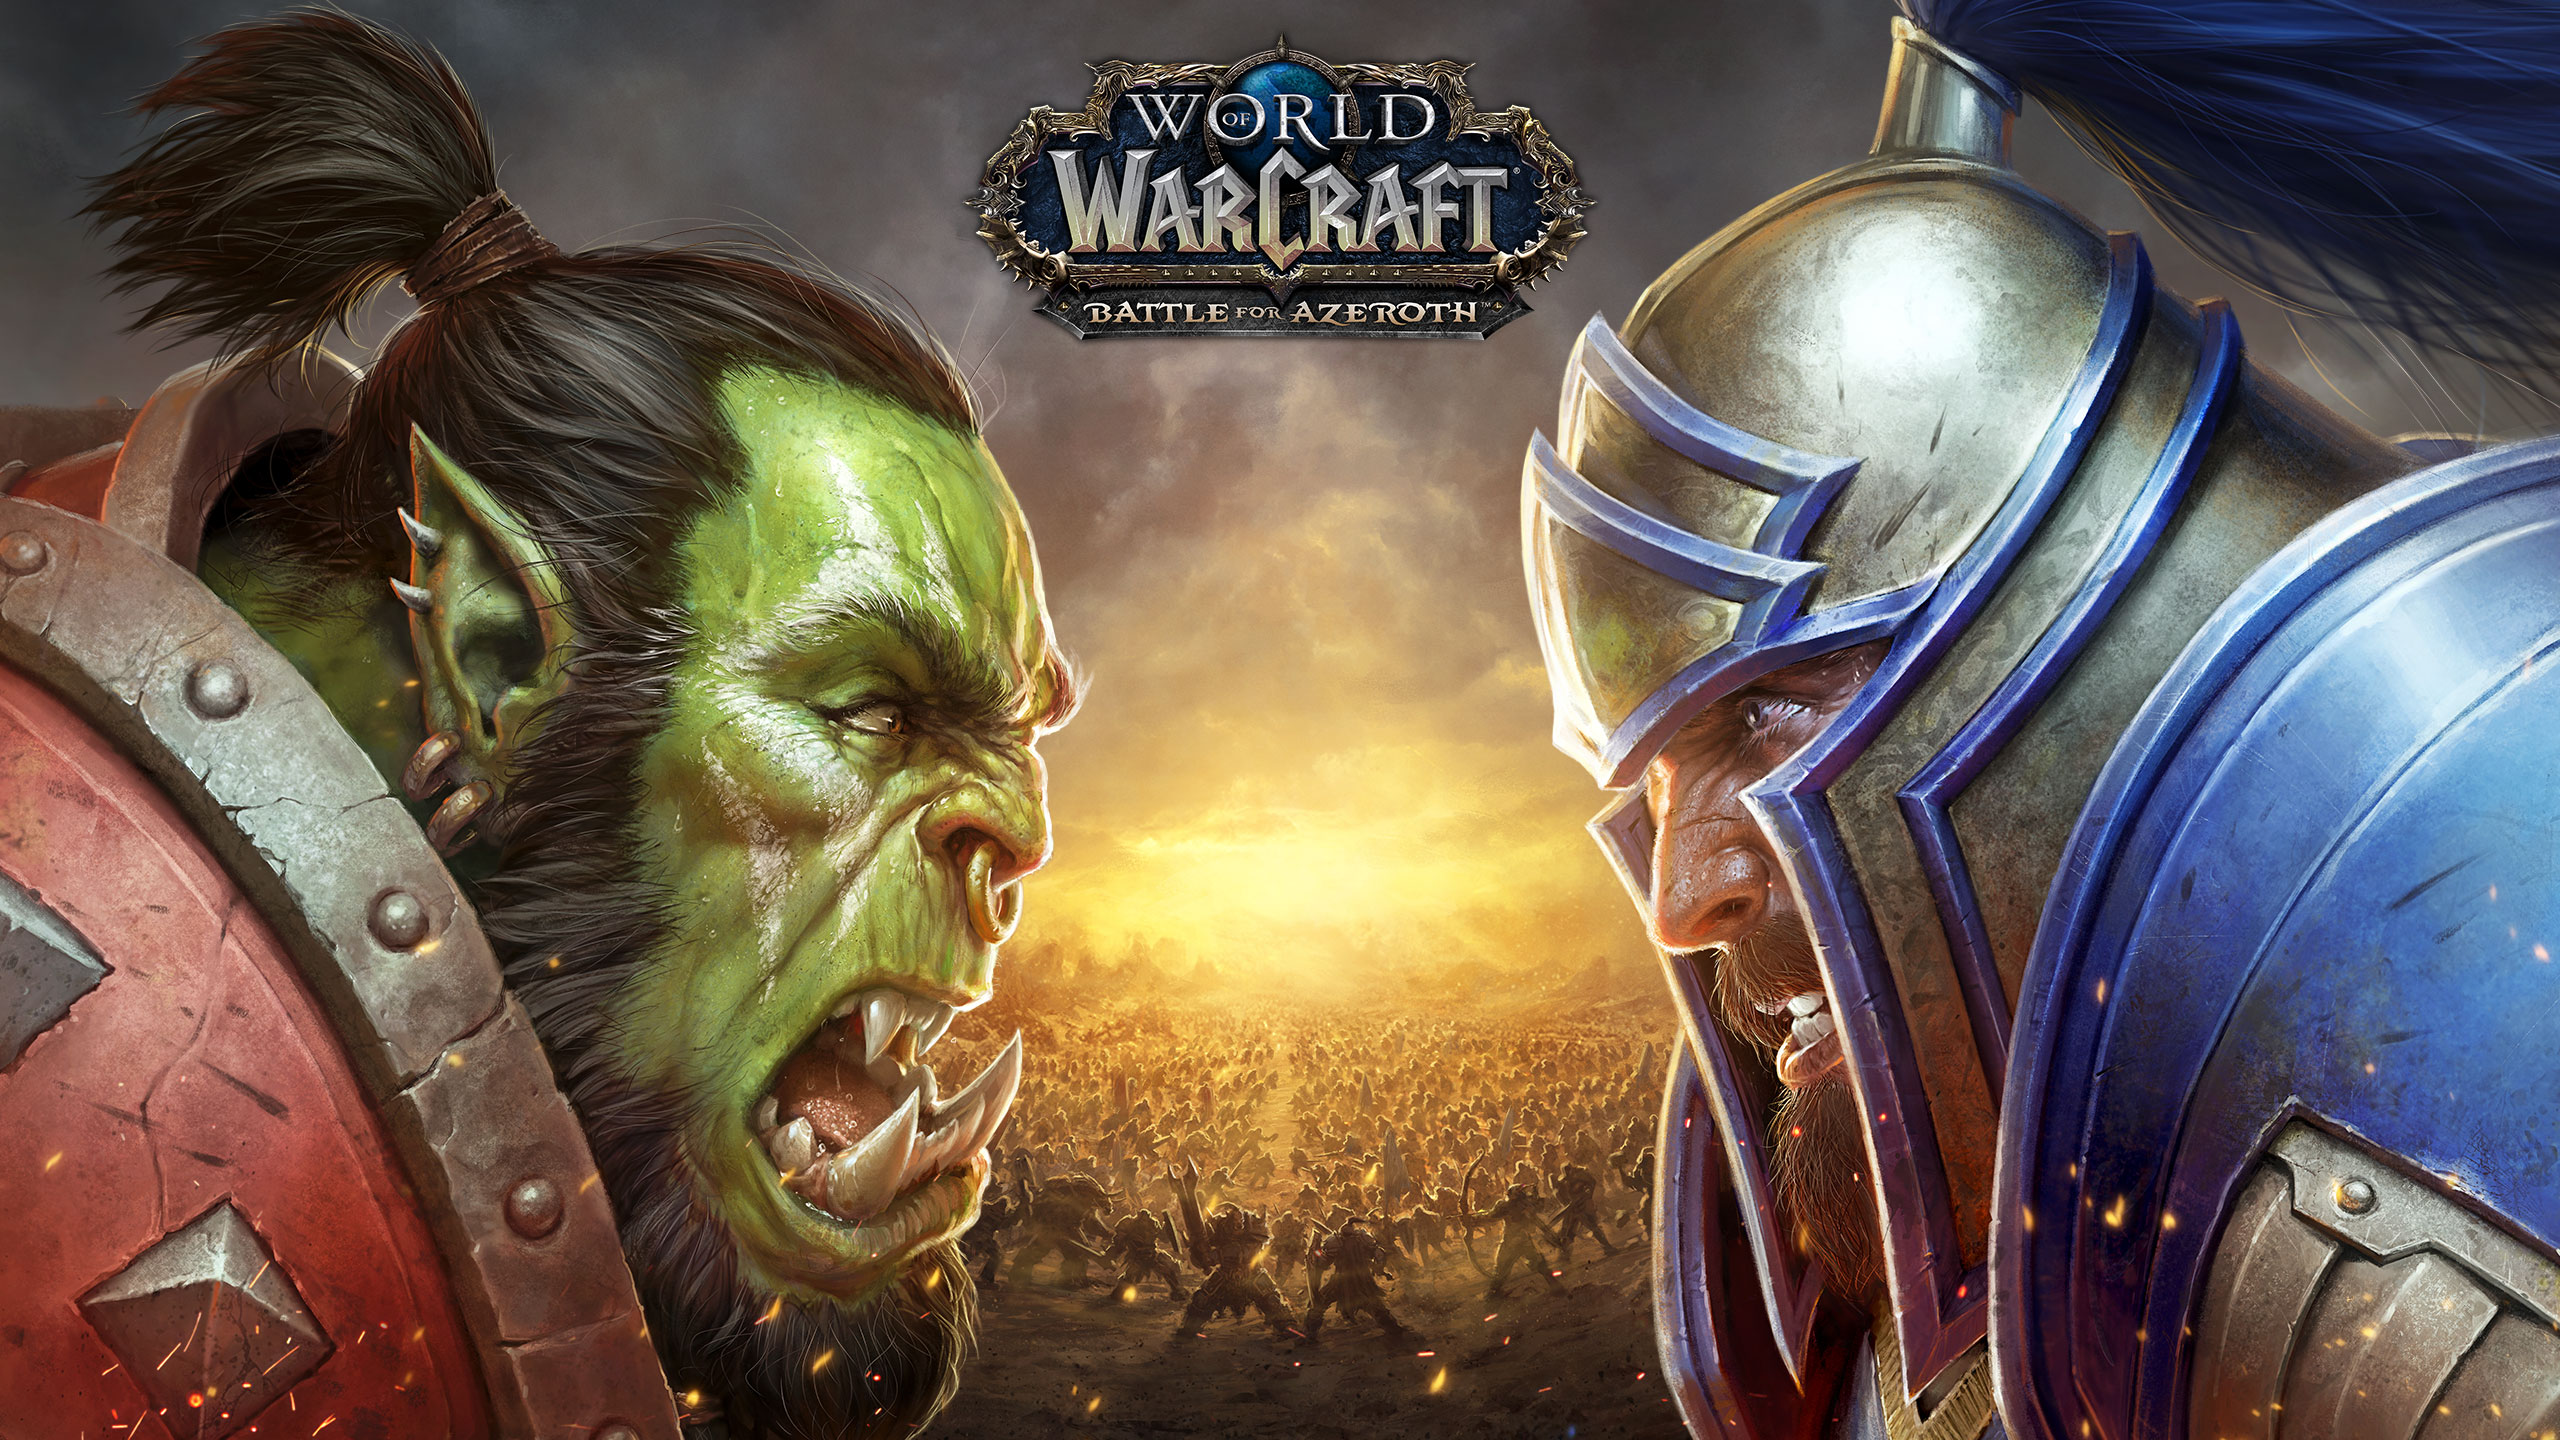 World Of Warcraft Battle For Azeroth Video Games Artwork Orc Horde Alliance Warcraft World Of Warcra 2560x1440